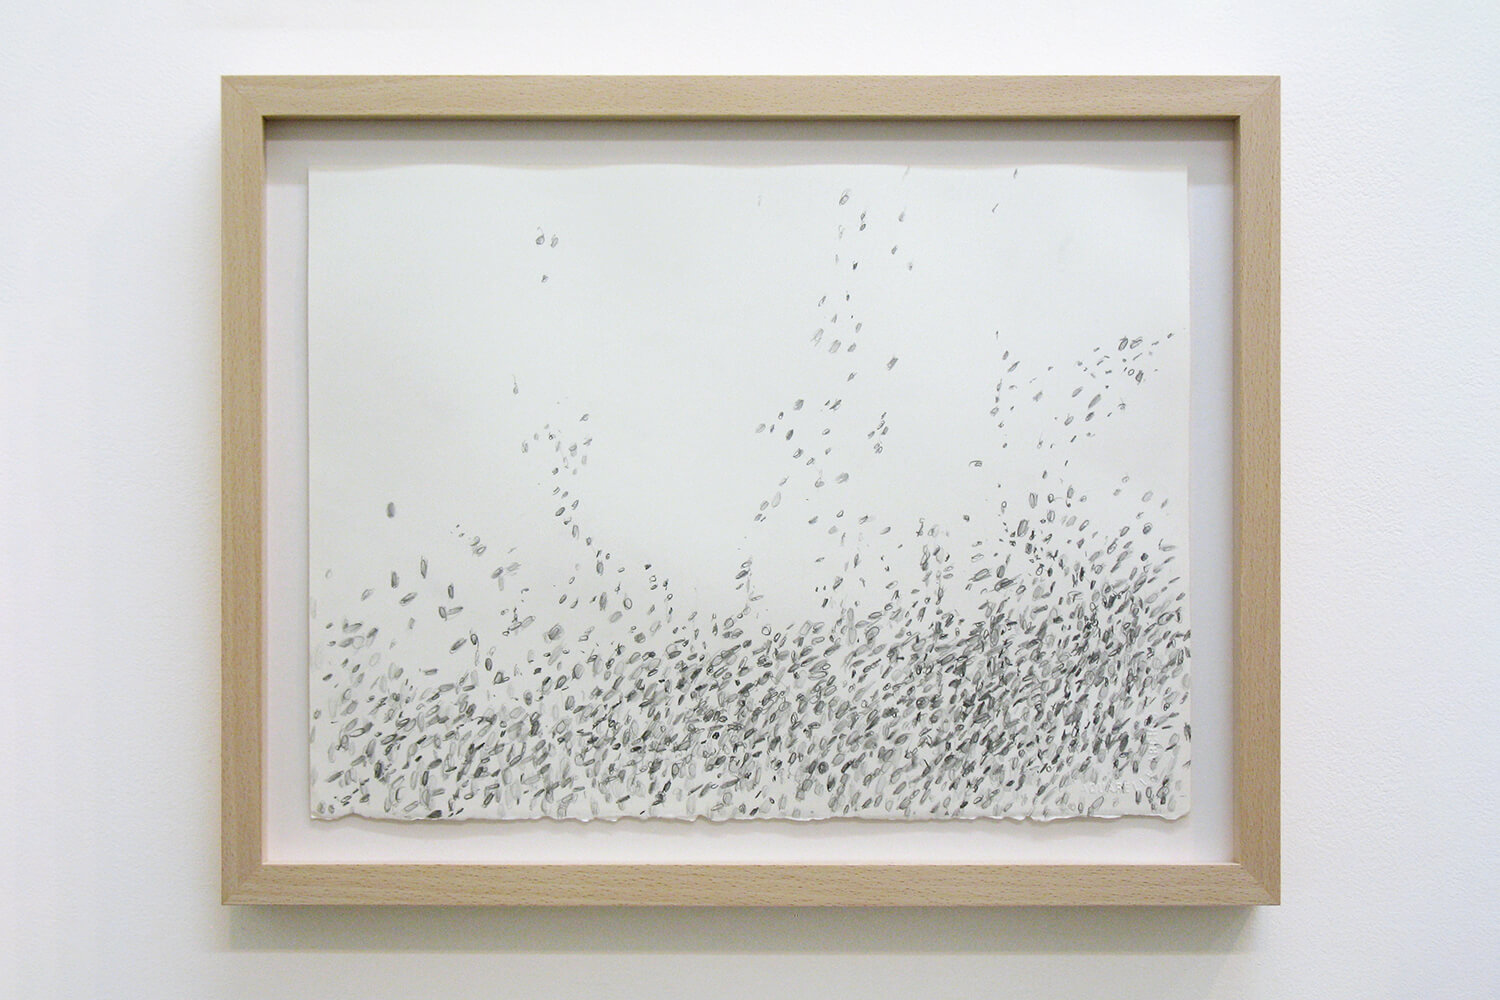 When the Dust Settles (d15)<br>Pencil on paper, 28.5 x 38 cm, 2011